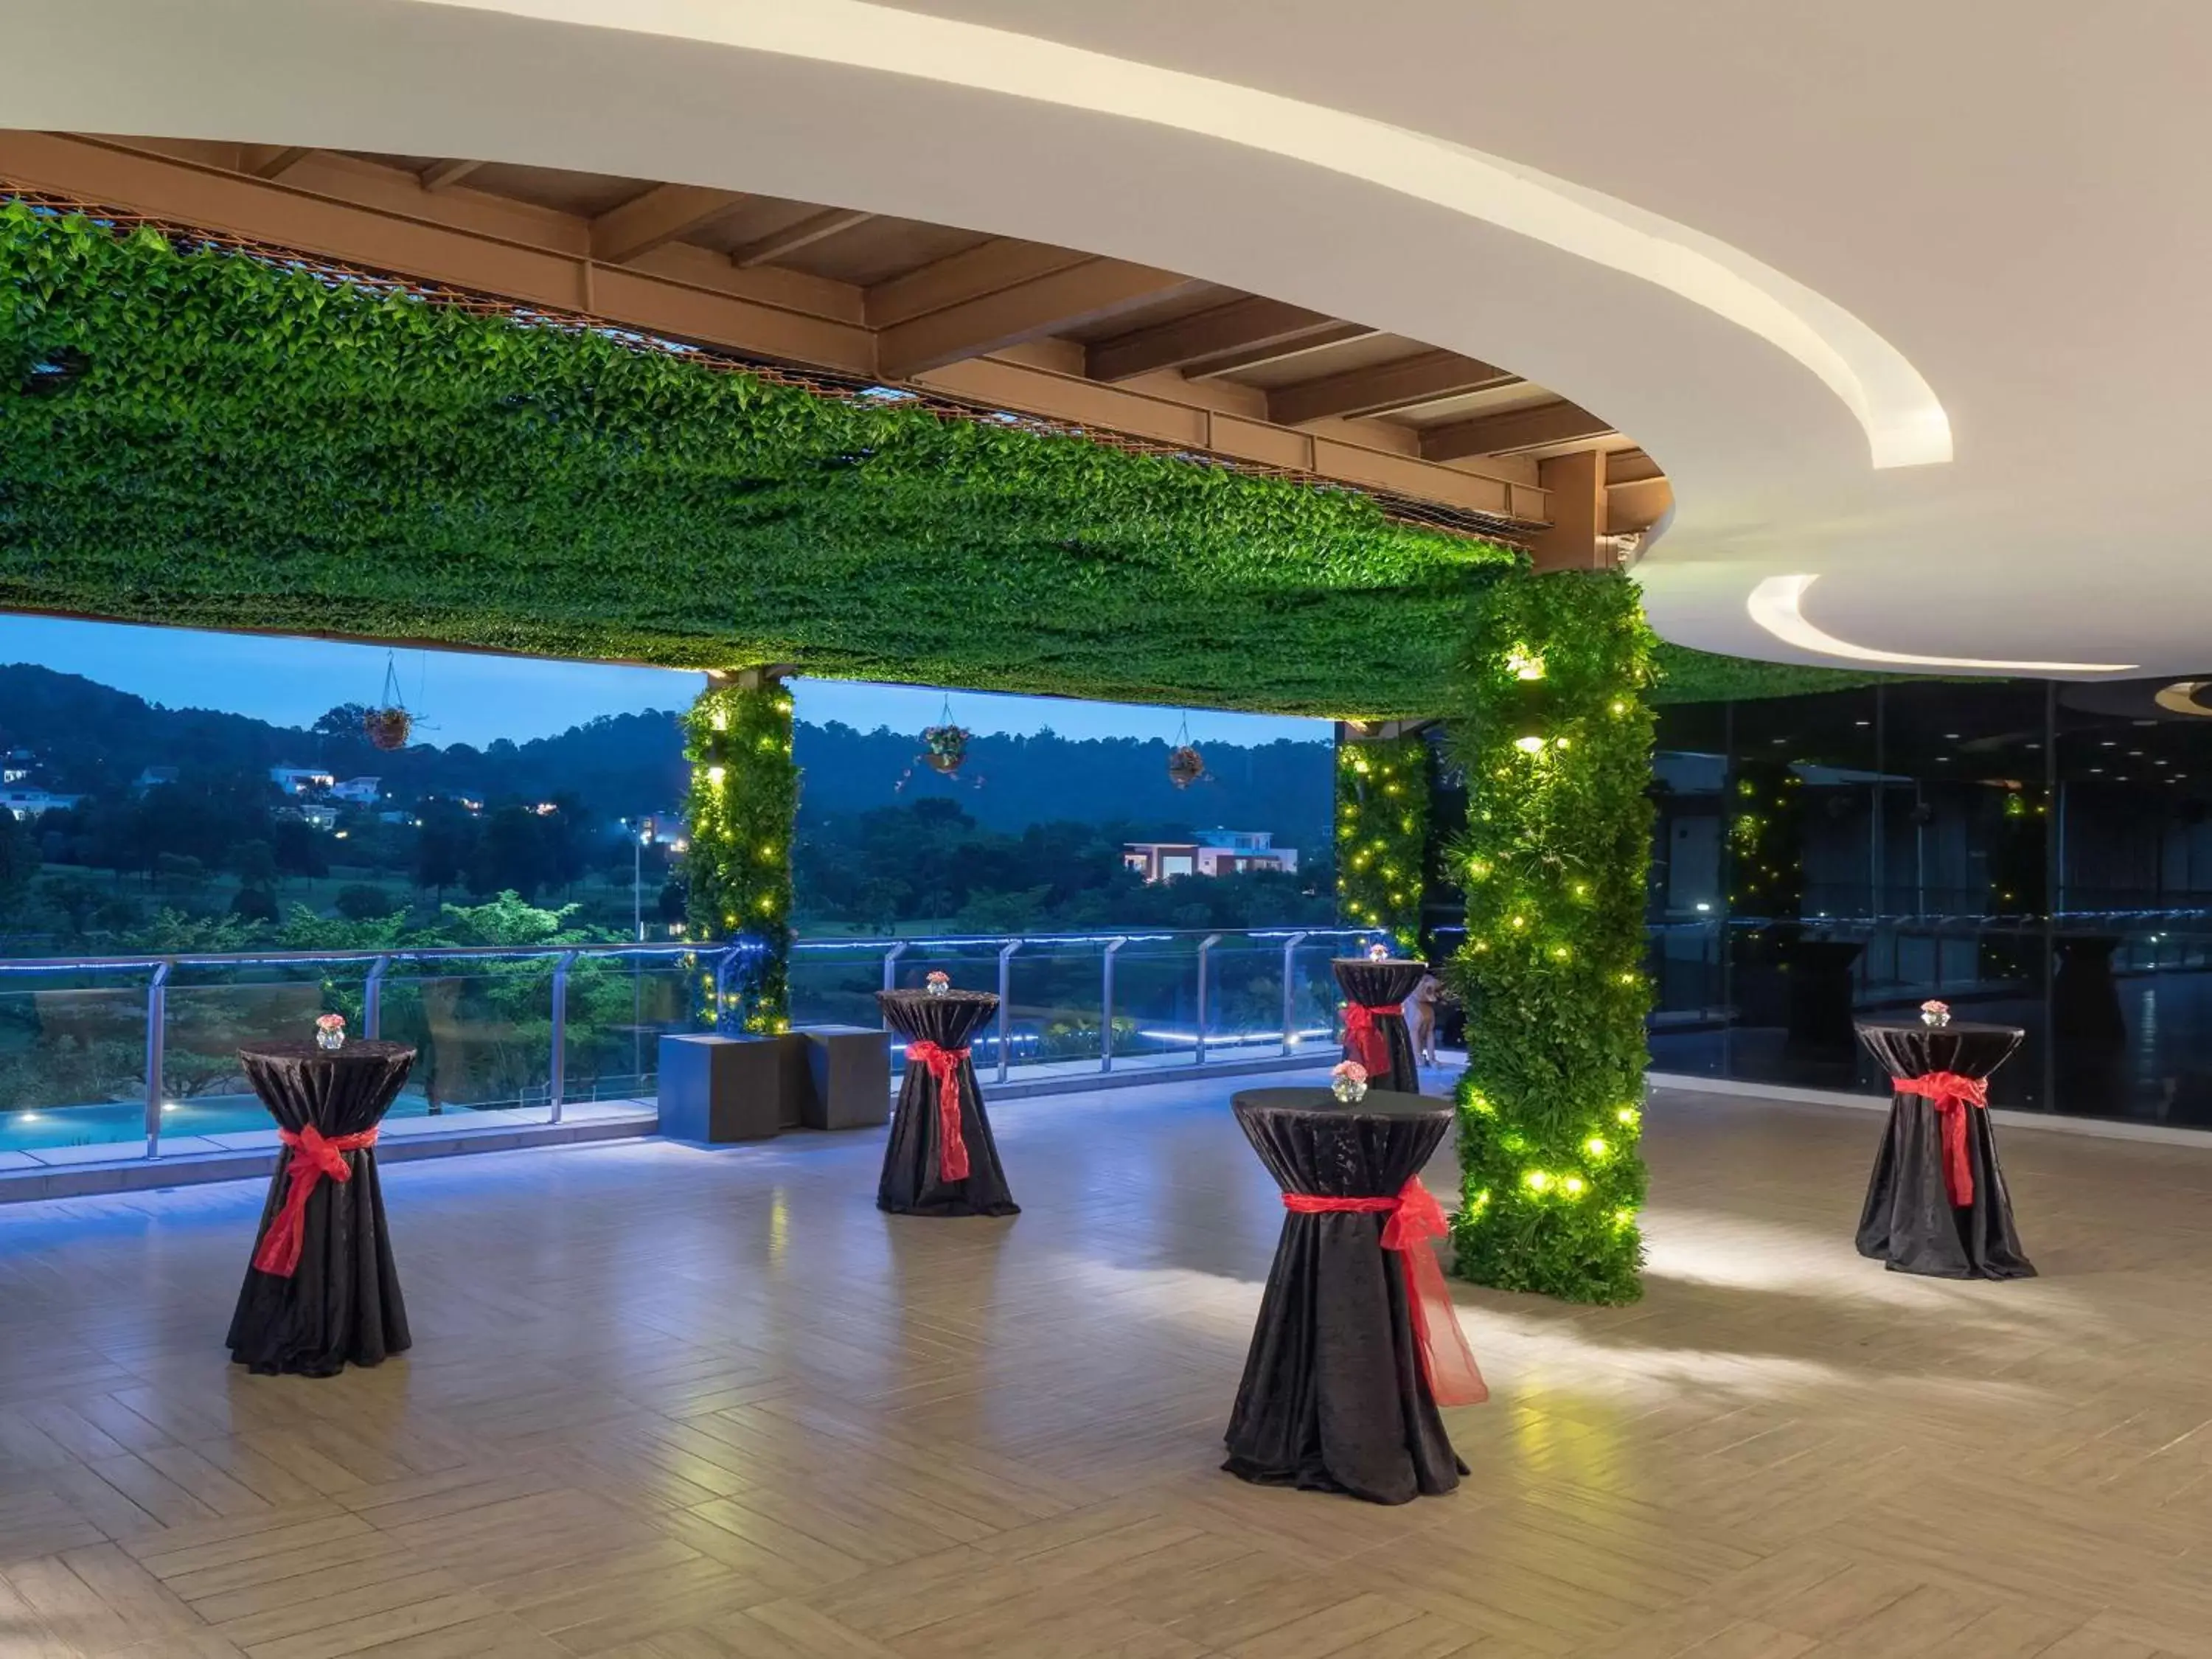 On site, Banquet Facilities in Radisson Golf & Convention Center Batam